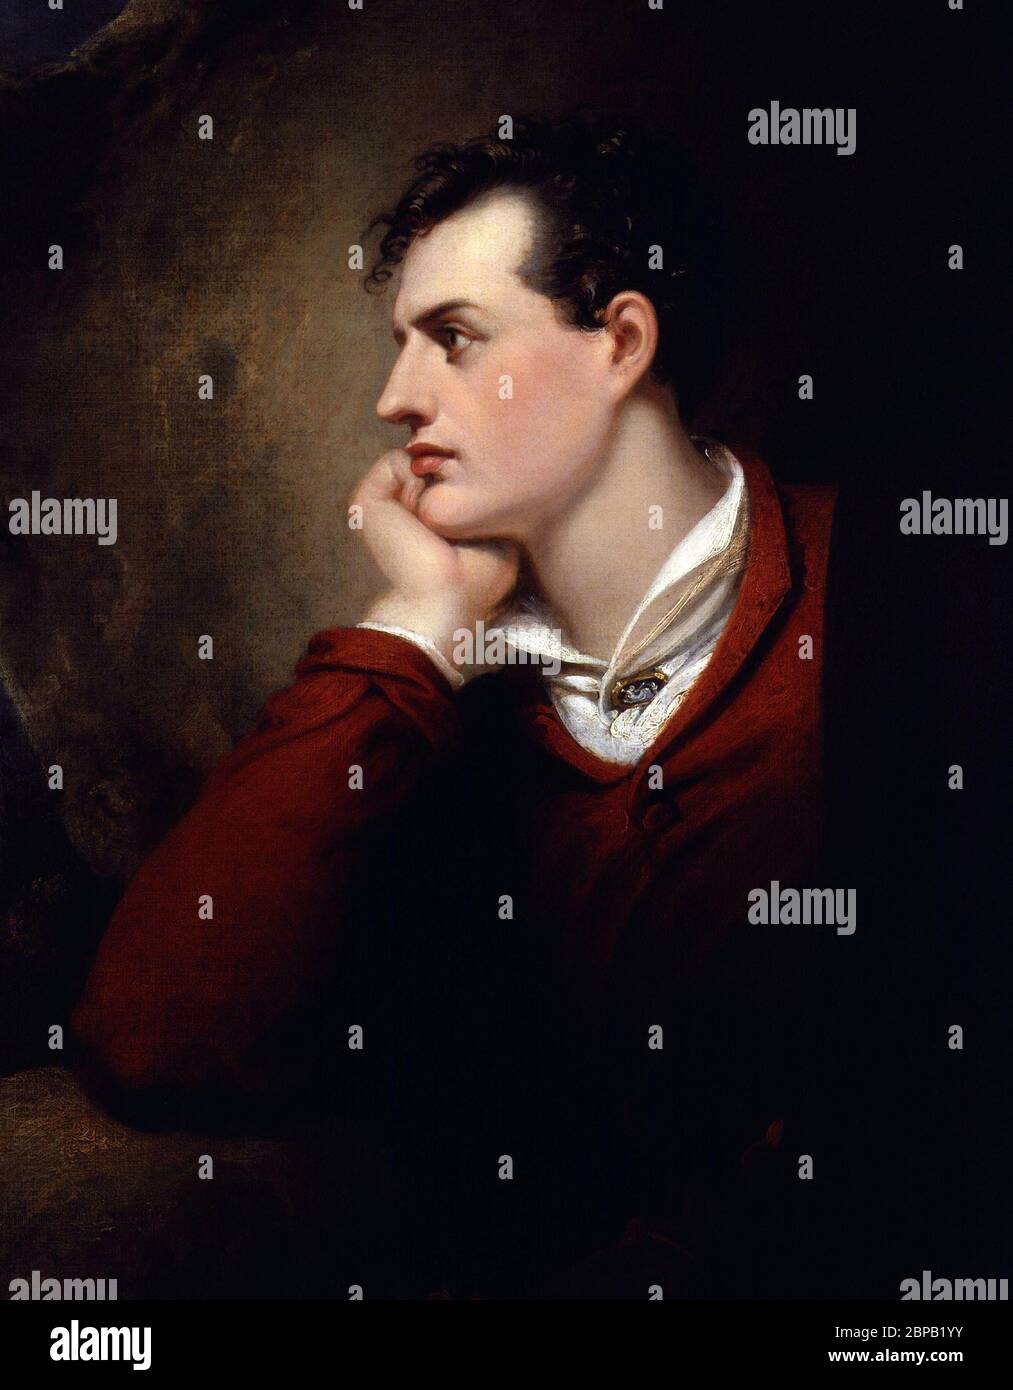 Signore Byron. Ritratto di George Gordon Byron, 6° barone Byron (1788-1824) di Richard Westall, olio su tela, 1813 Foto Stock